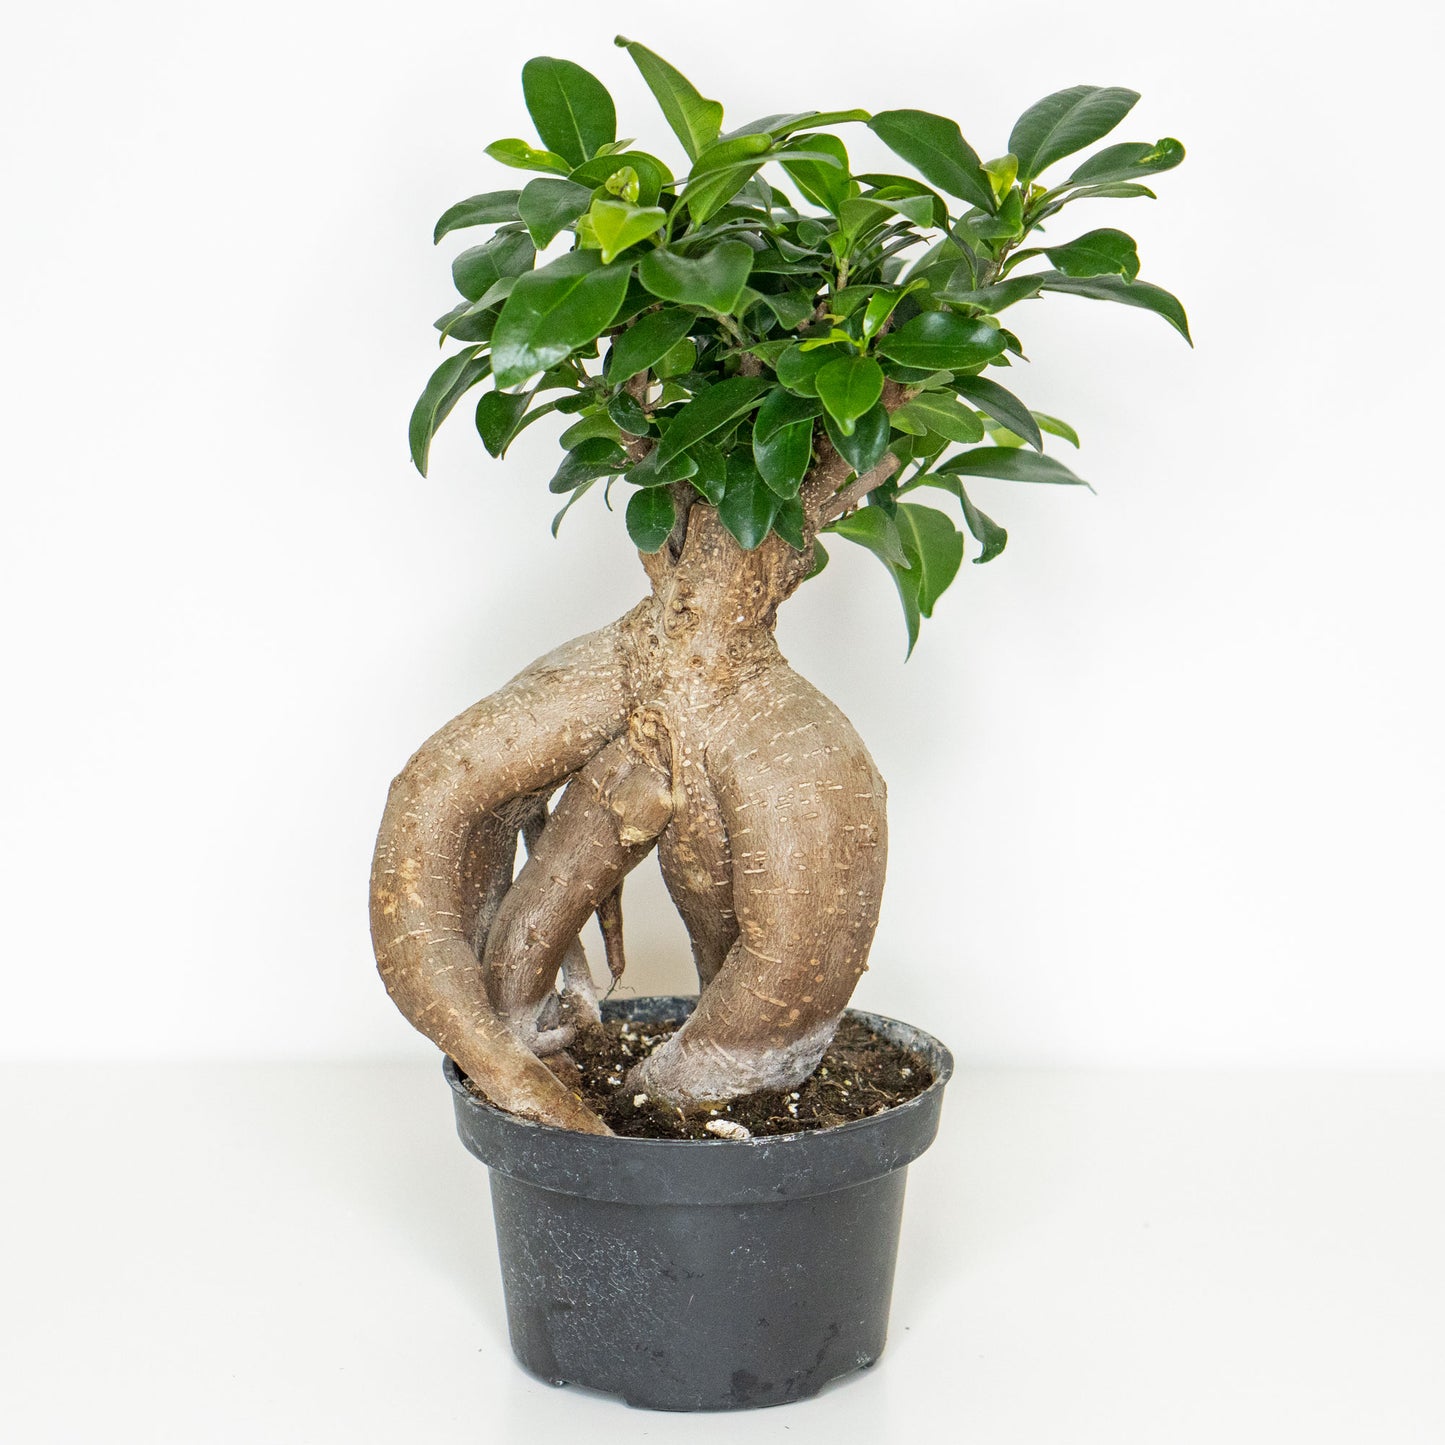 Potted Rare Houseplant Bonsai Ficus Retusa 6” - Buy repotted rare indoor plant Bonsai Ficus Retusa for delivery at Planteia